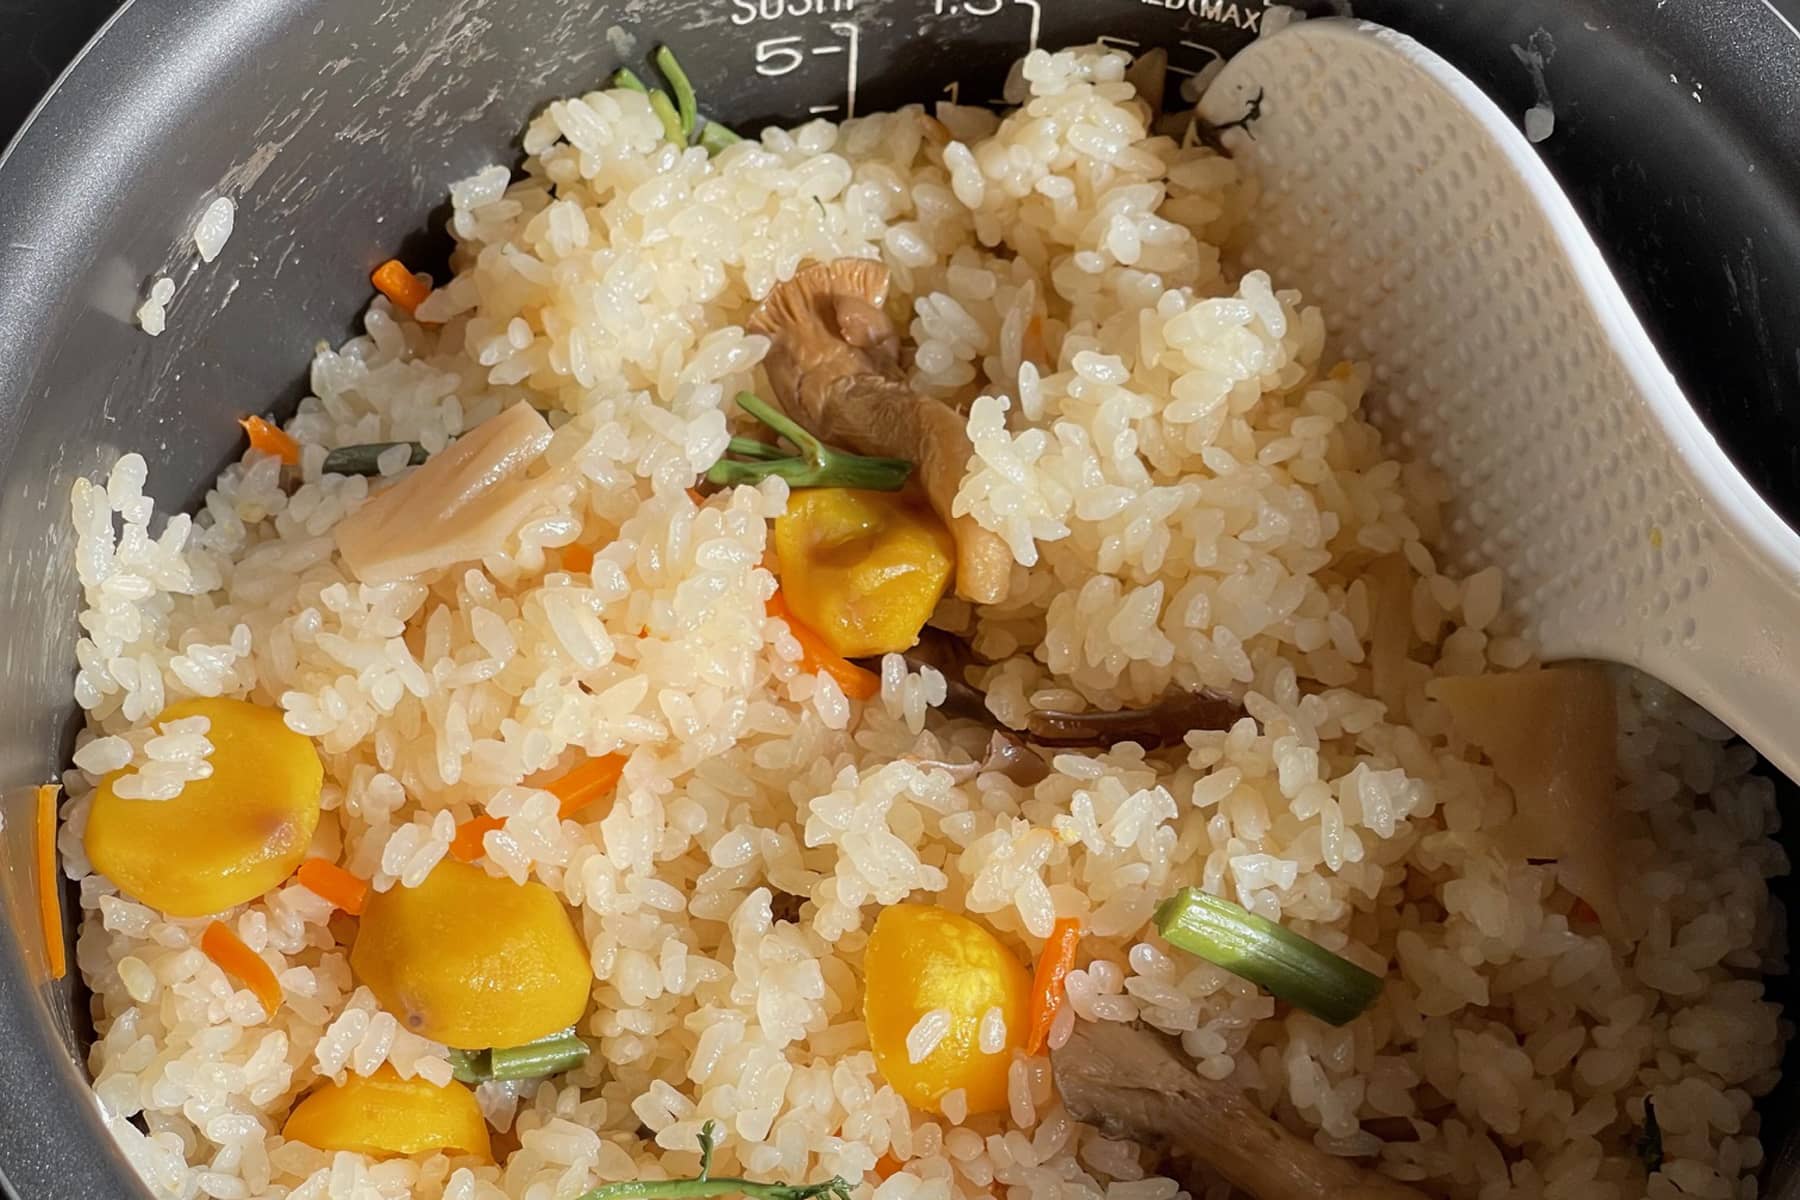 Do More with Zojirushi Mini Food Jars: Favorite Meals To-Go - Zojirushi  BlogZojirushi Blog